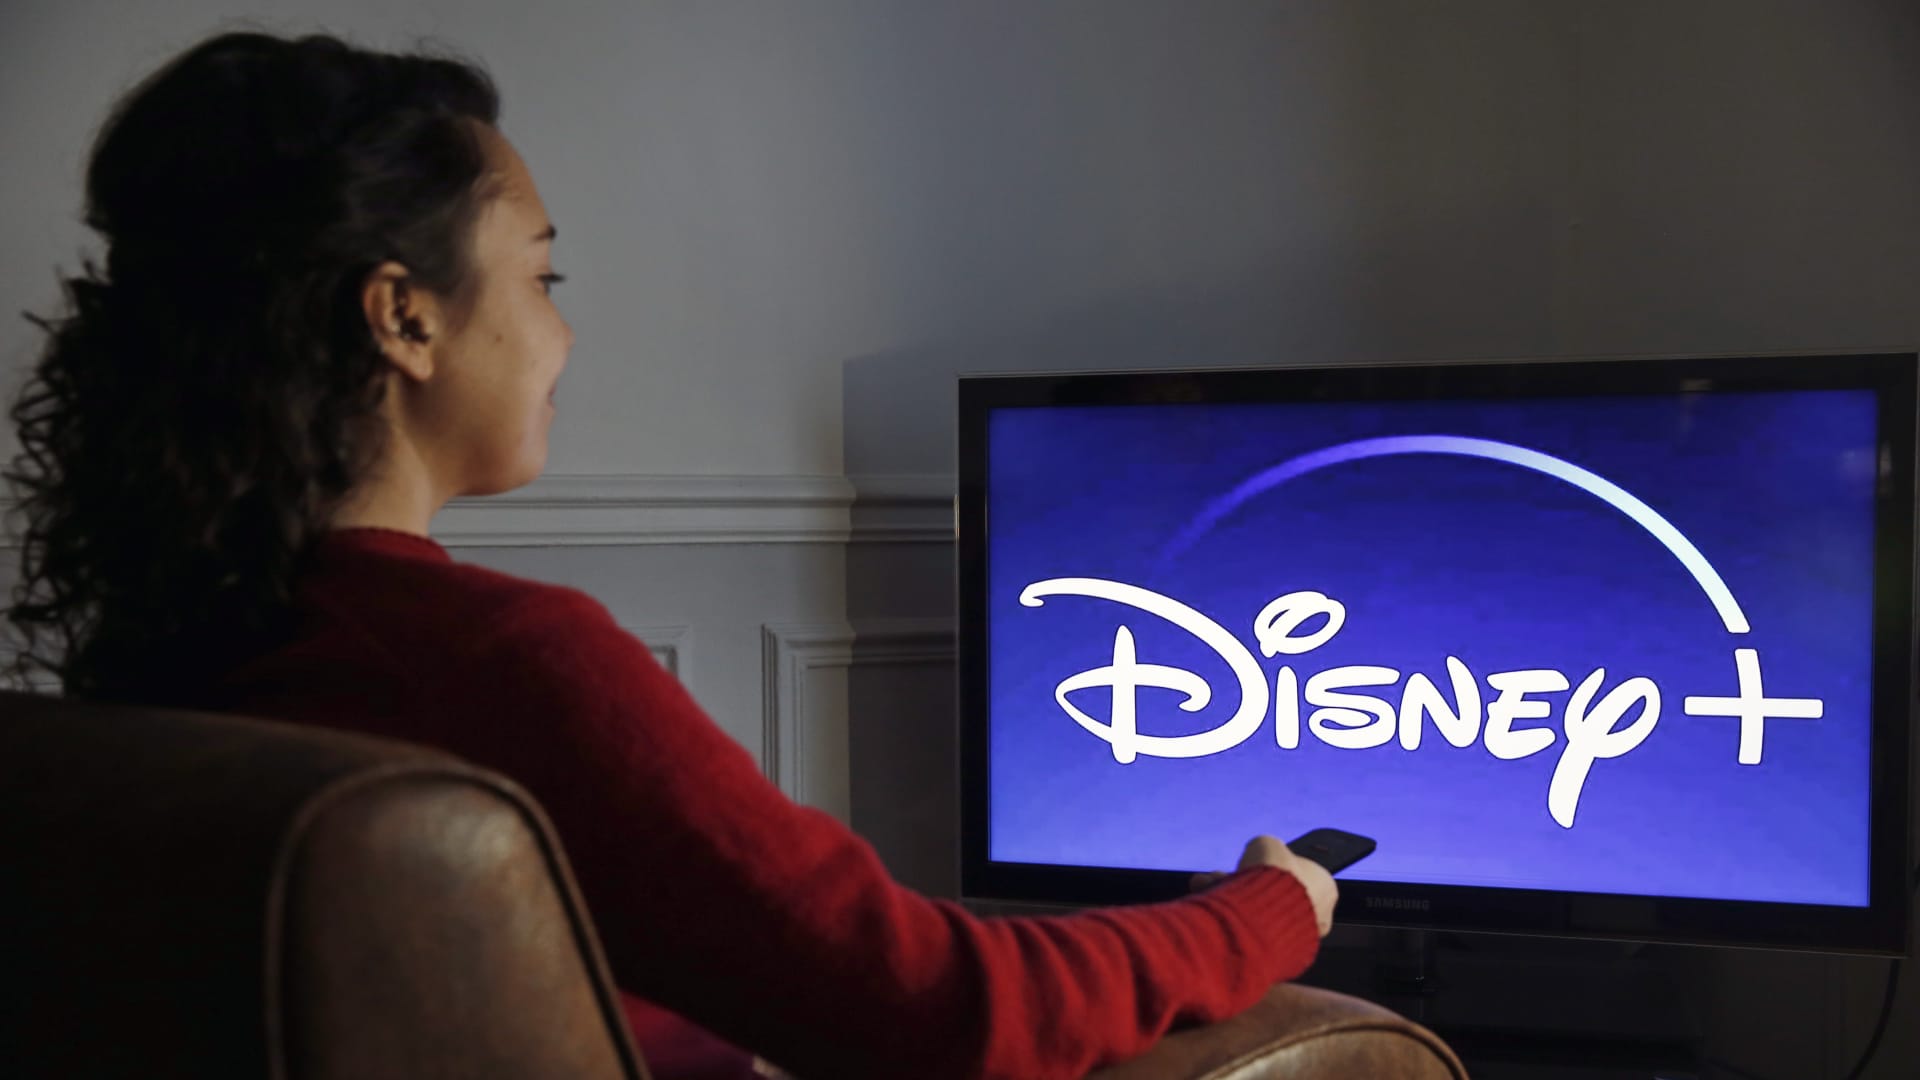 Disney to raise price on ad-free Disney+ to .99 per month starting October 12